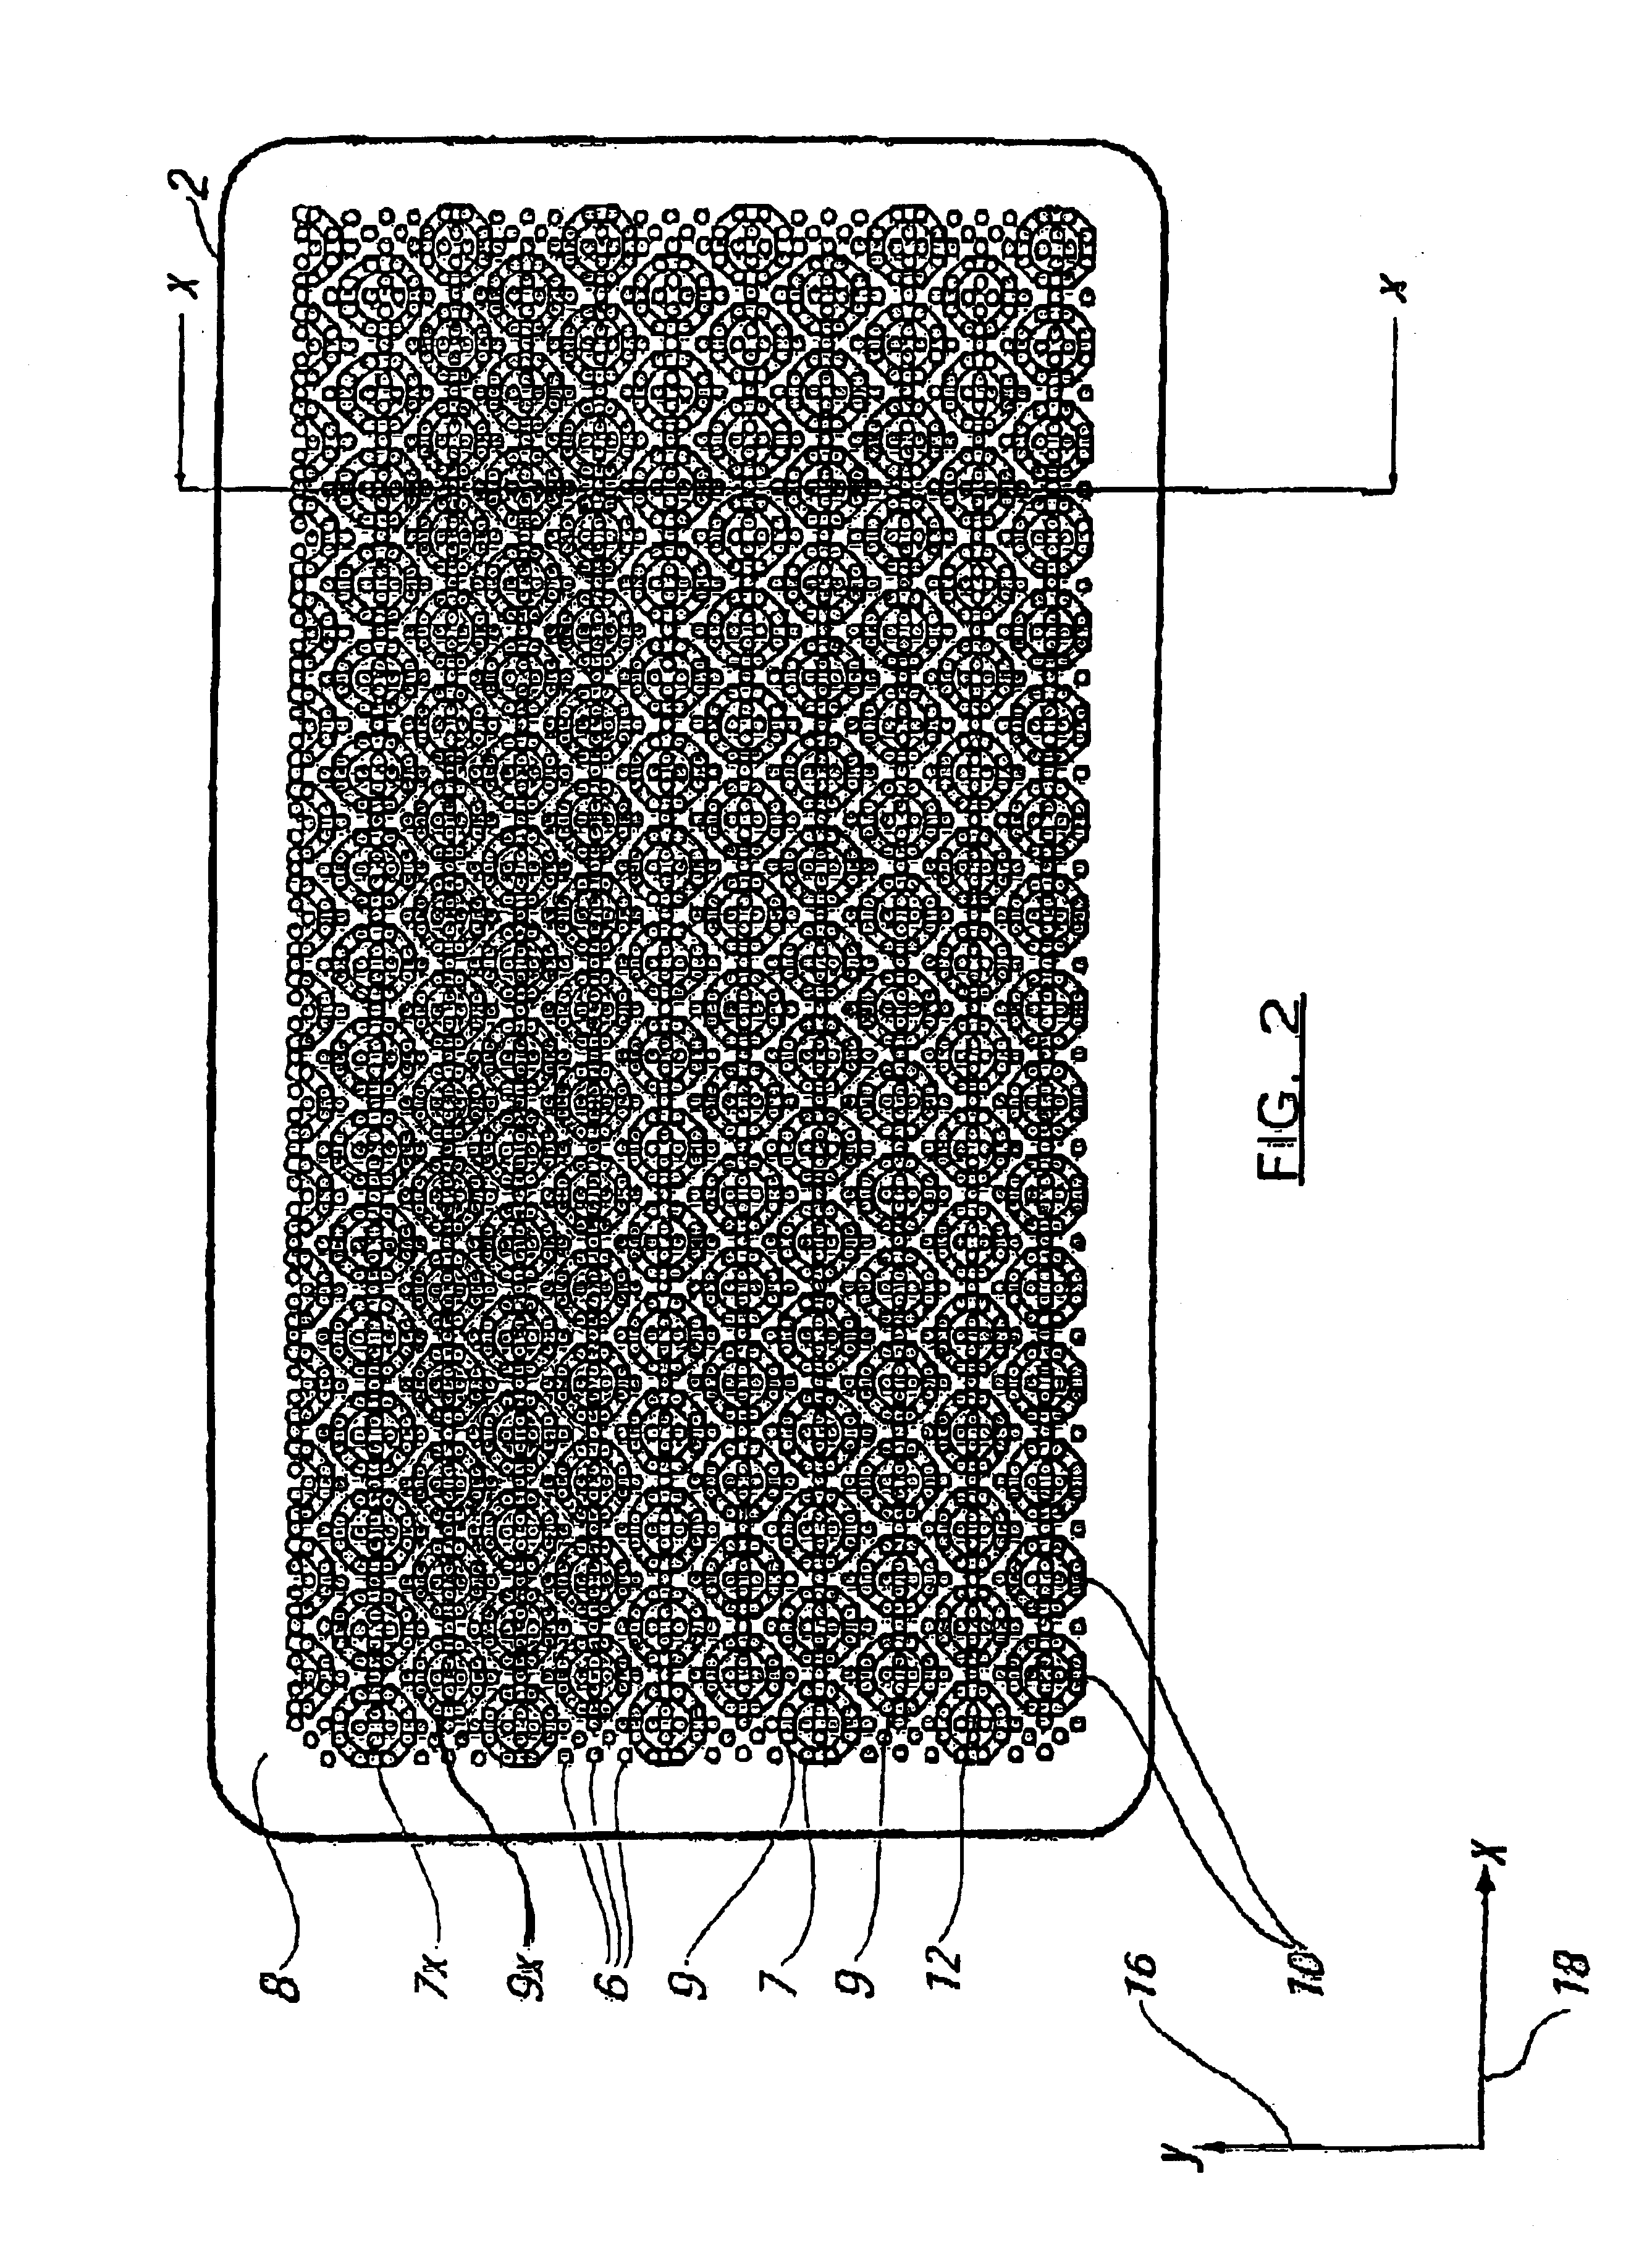 Burner plaque with continuous channels